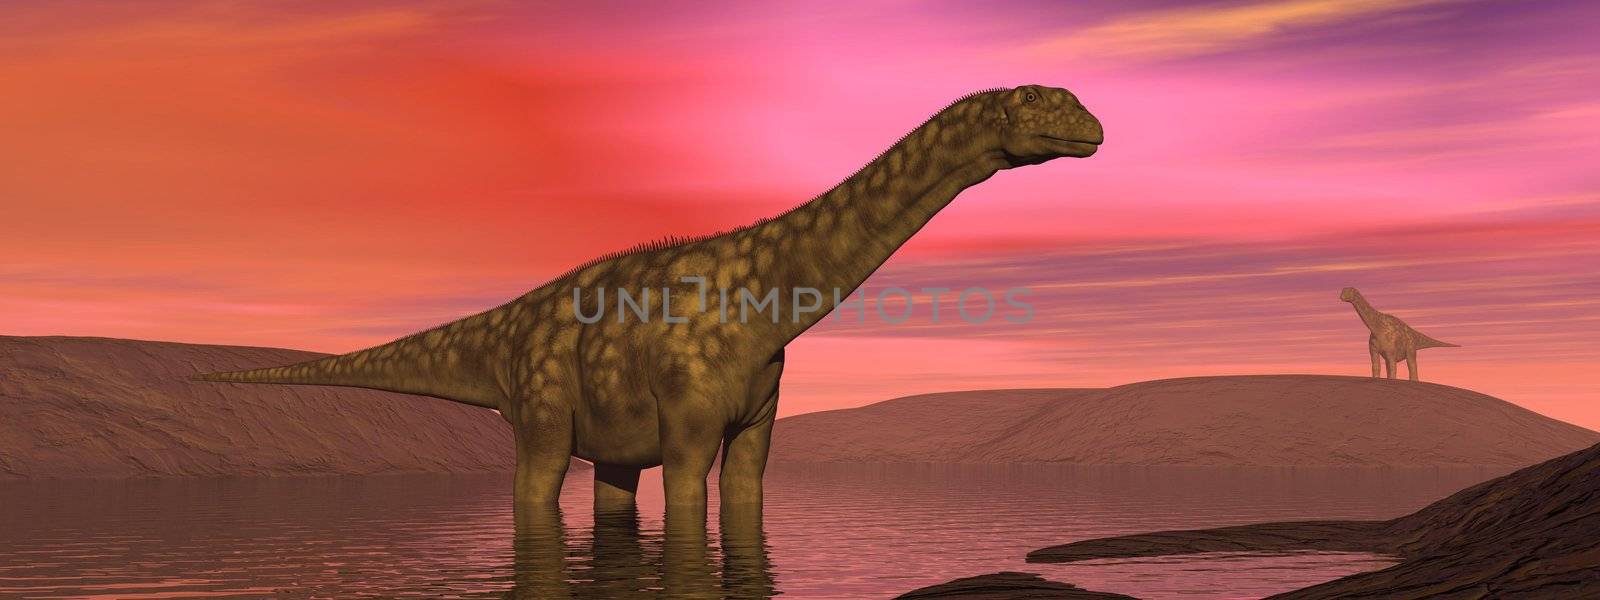 Two dinosaur argentinosaurus in desert landscape by red sunset